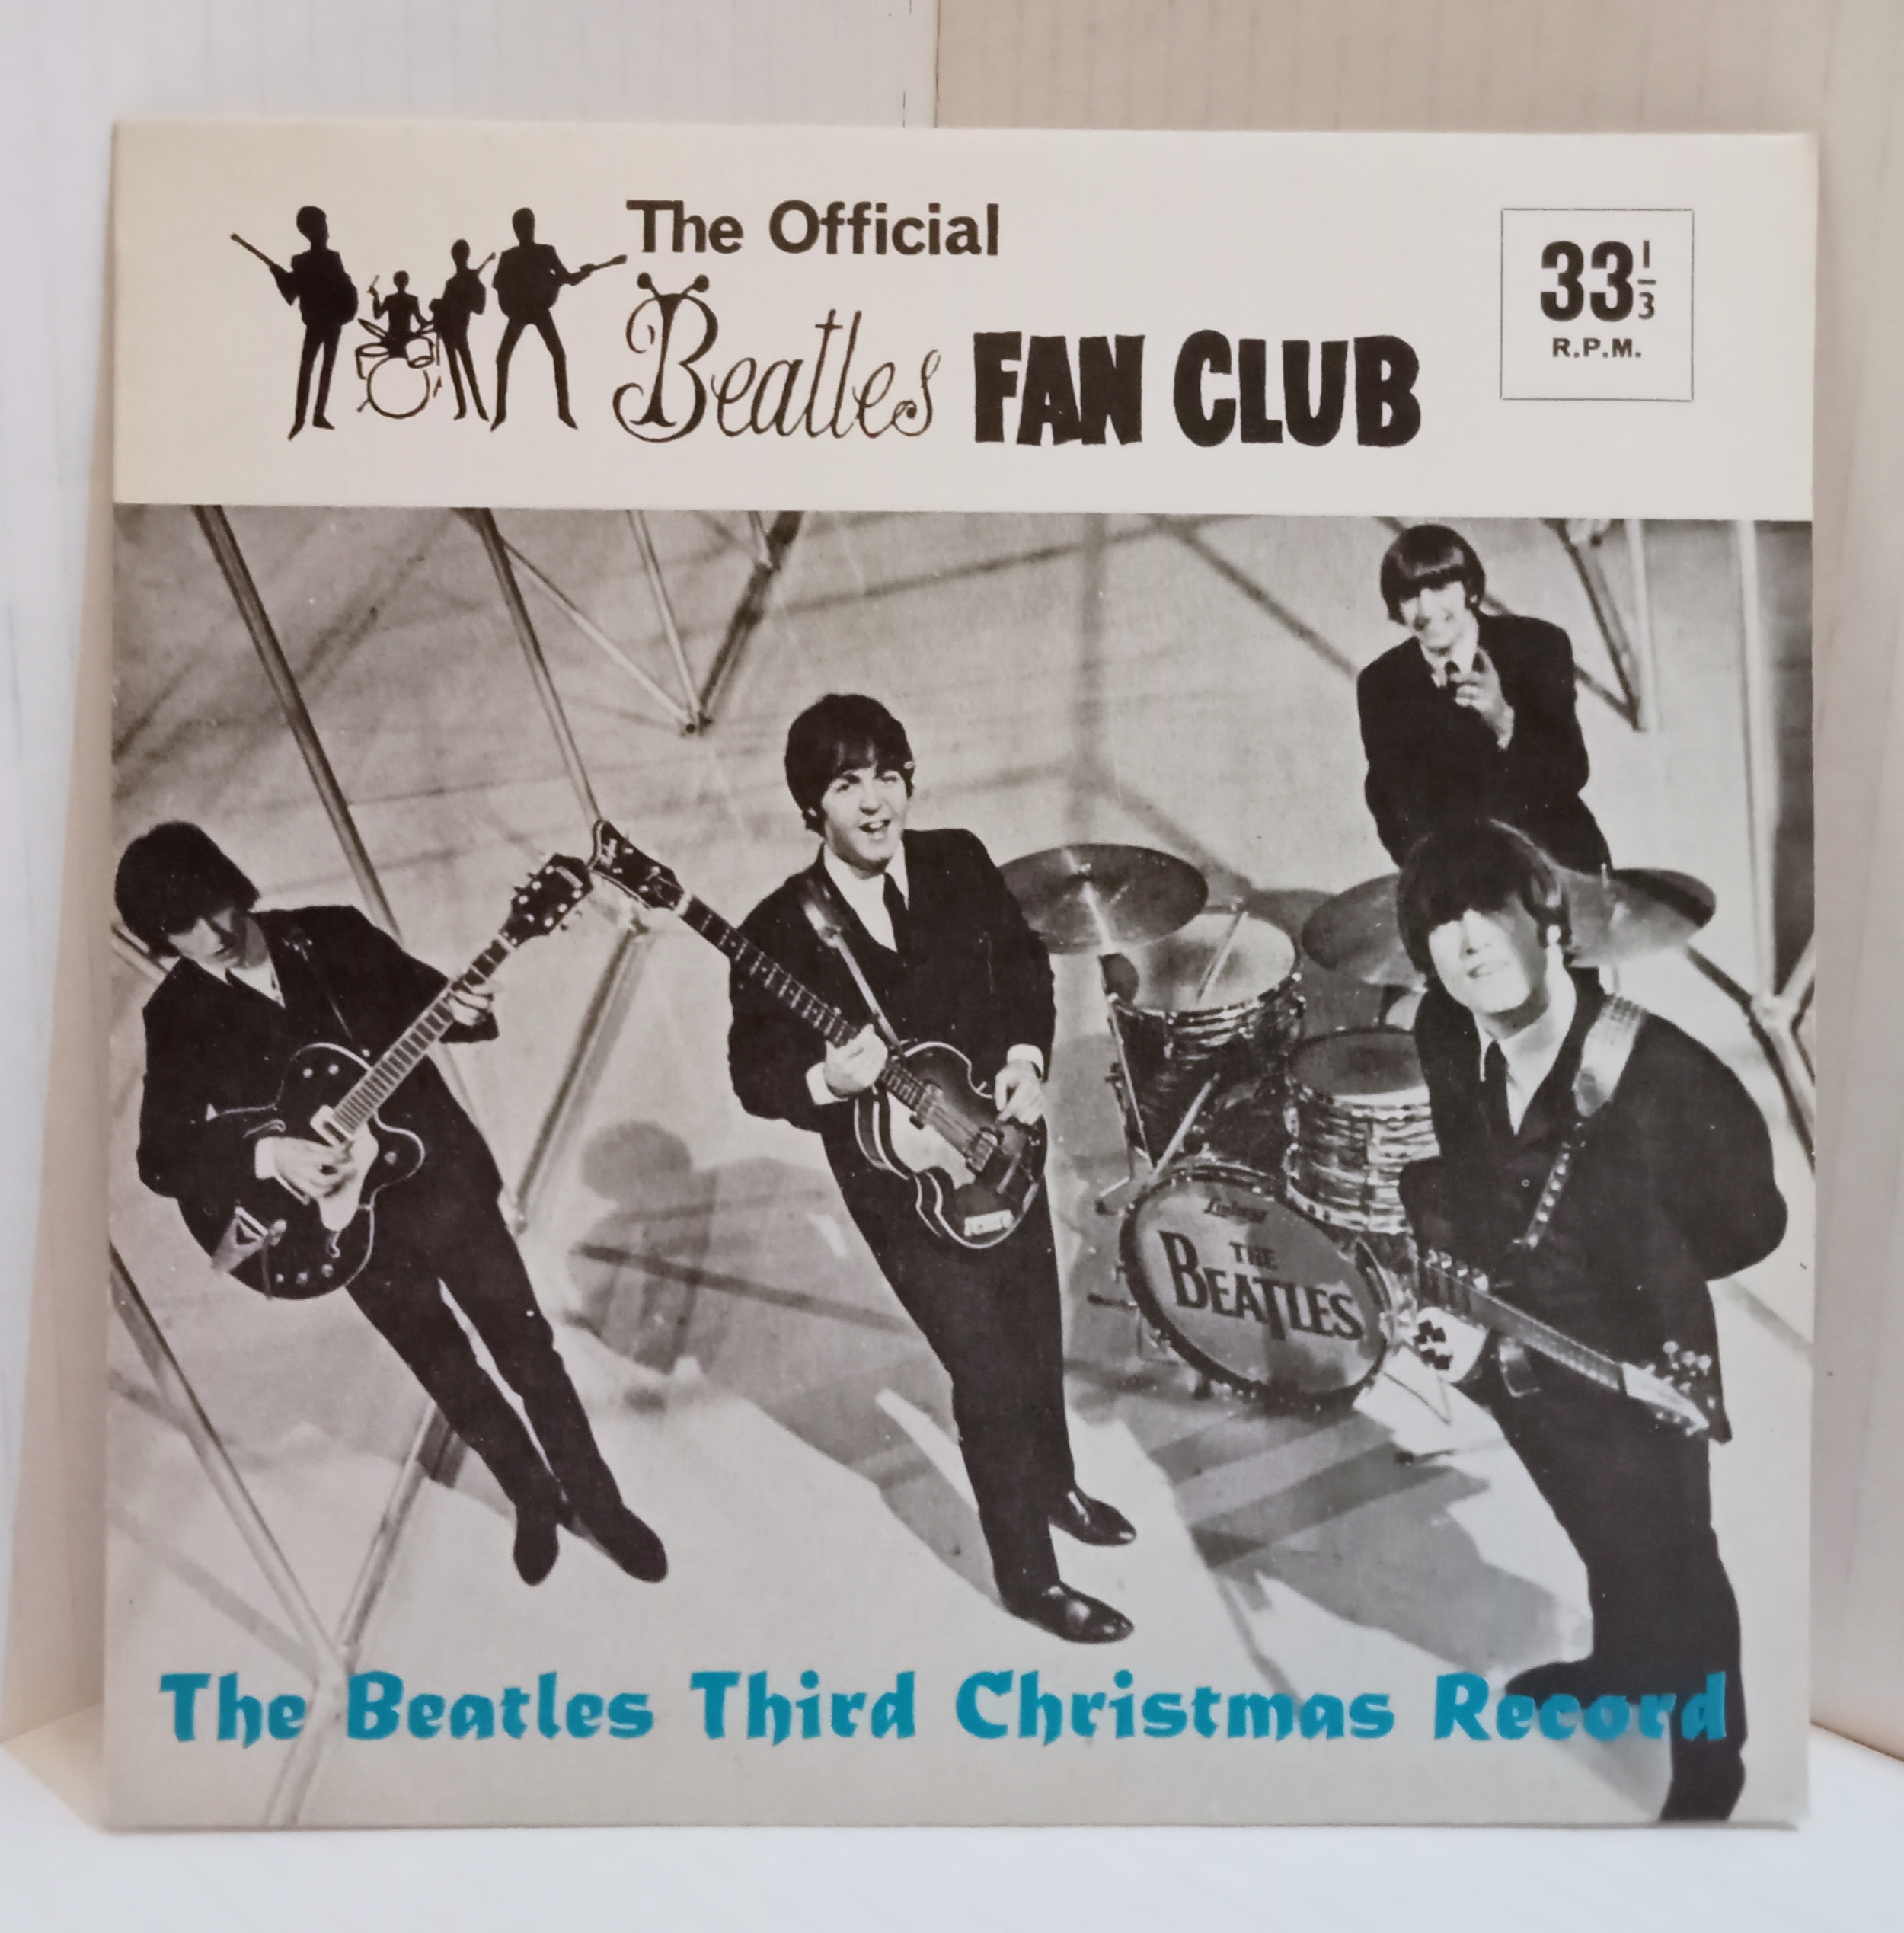 The Beatles 1965 Fan Club Christmas flexi record.